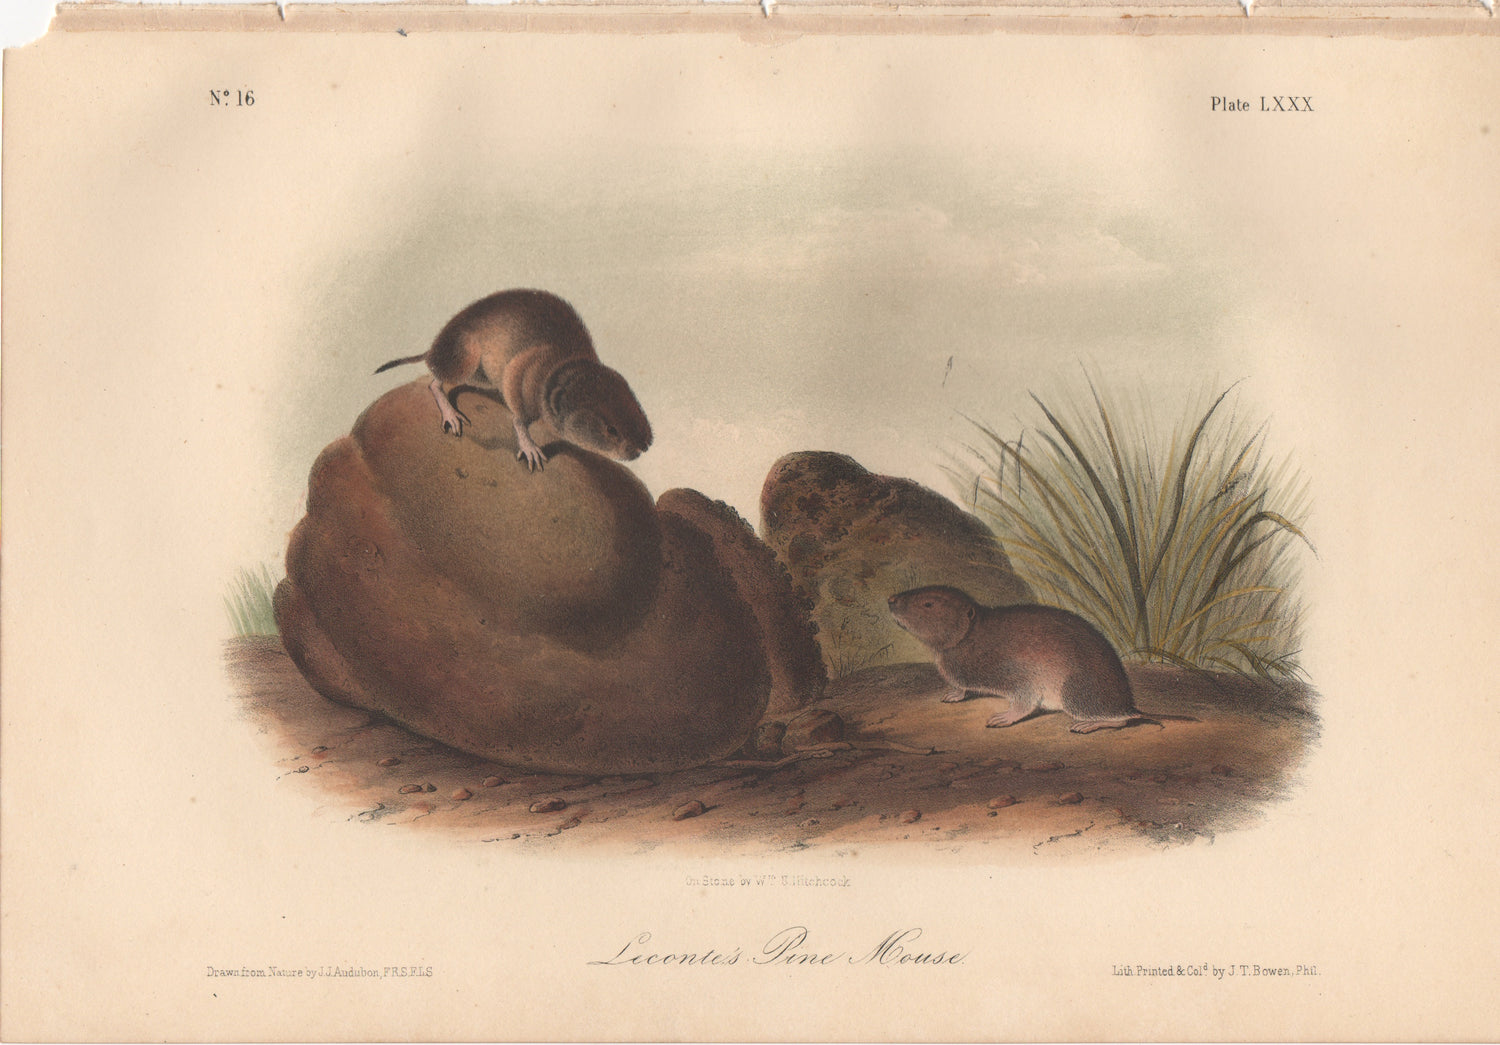 Audubon Original Octavo Mammal, Leconte's Pine Mouse plate 80